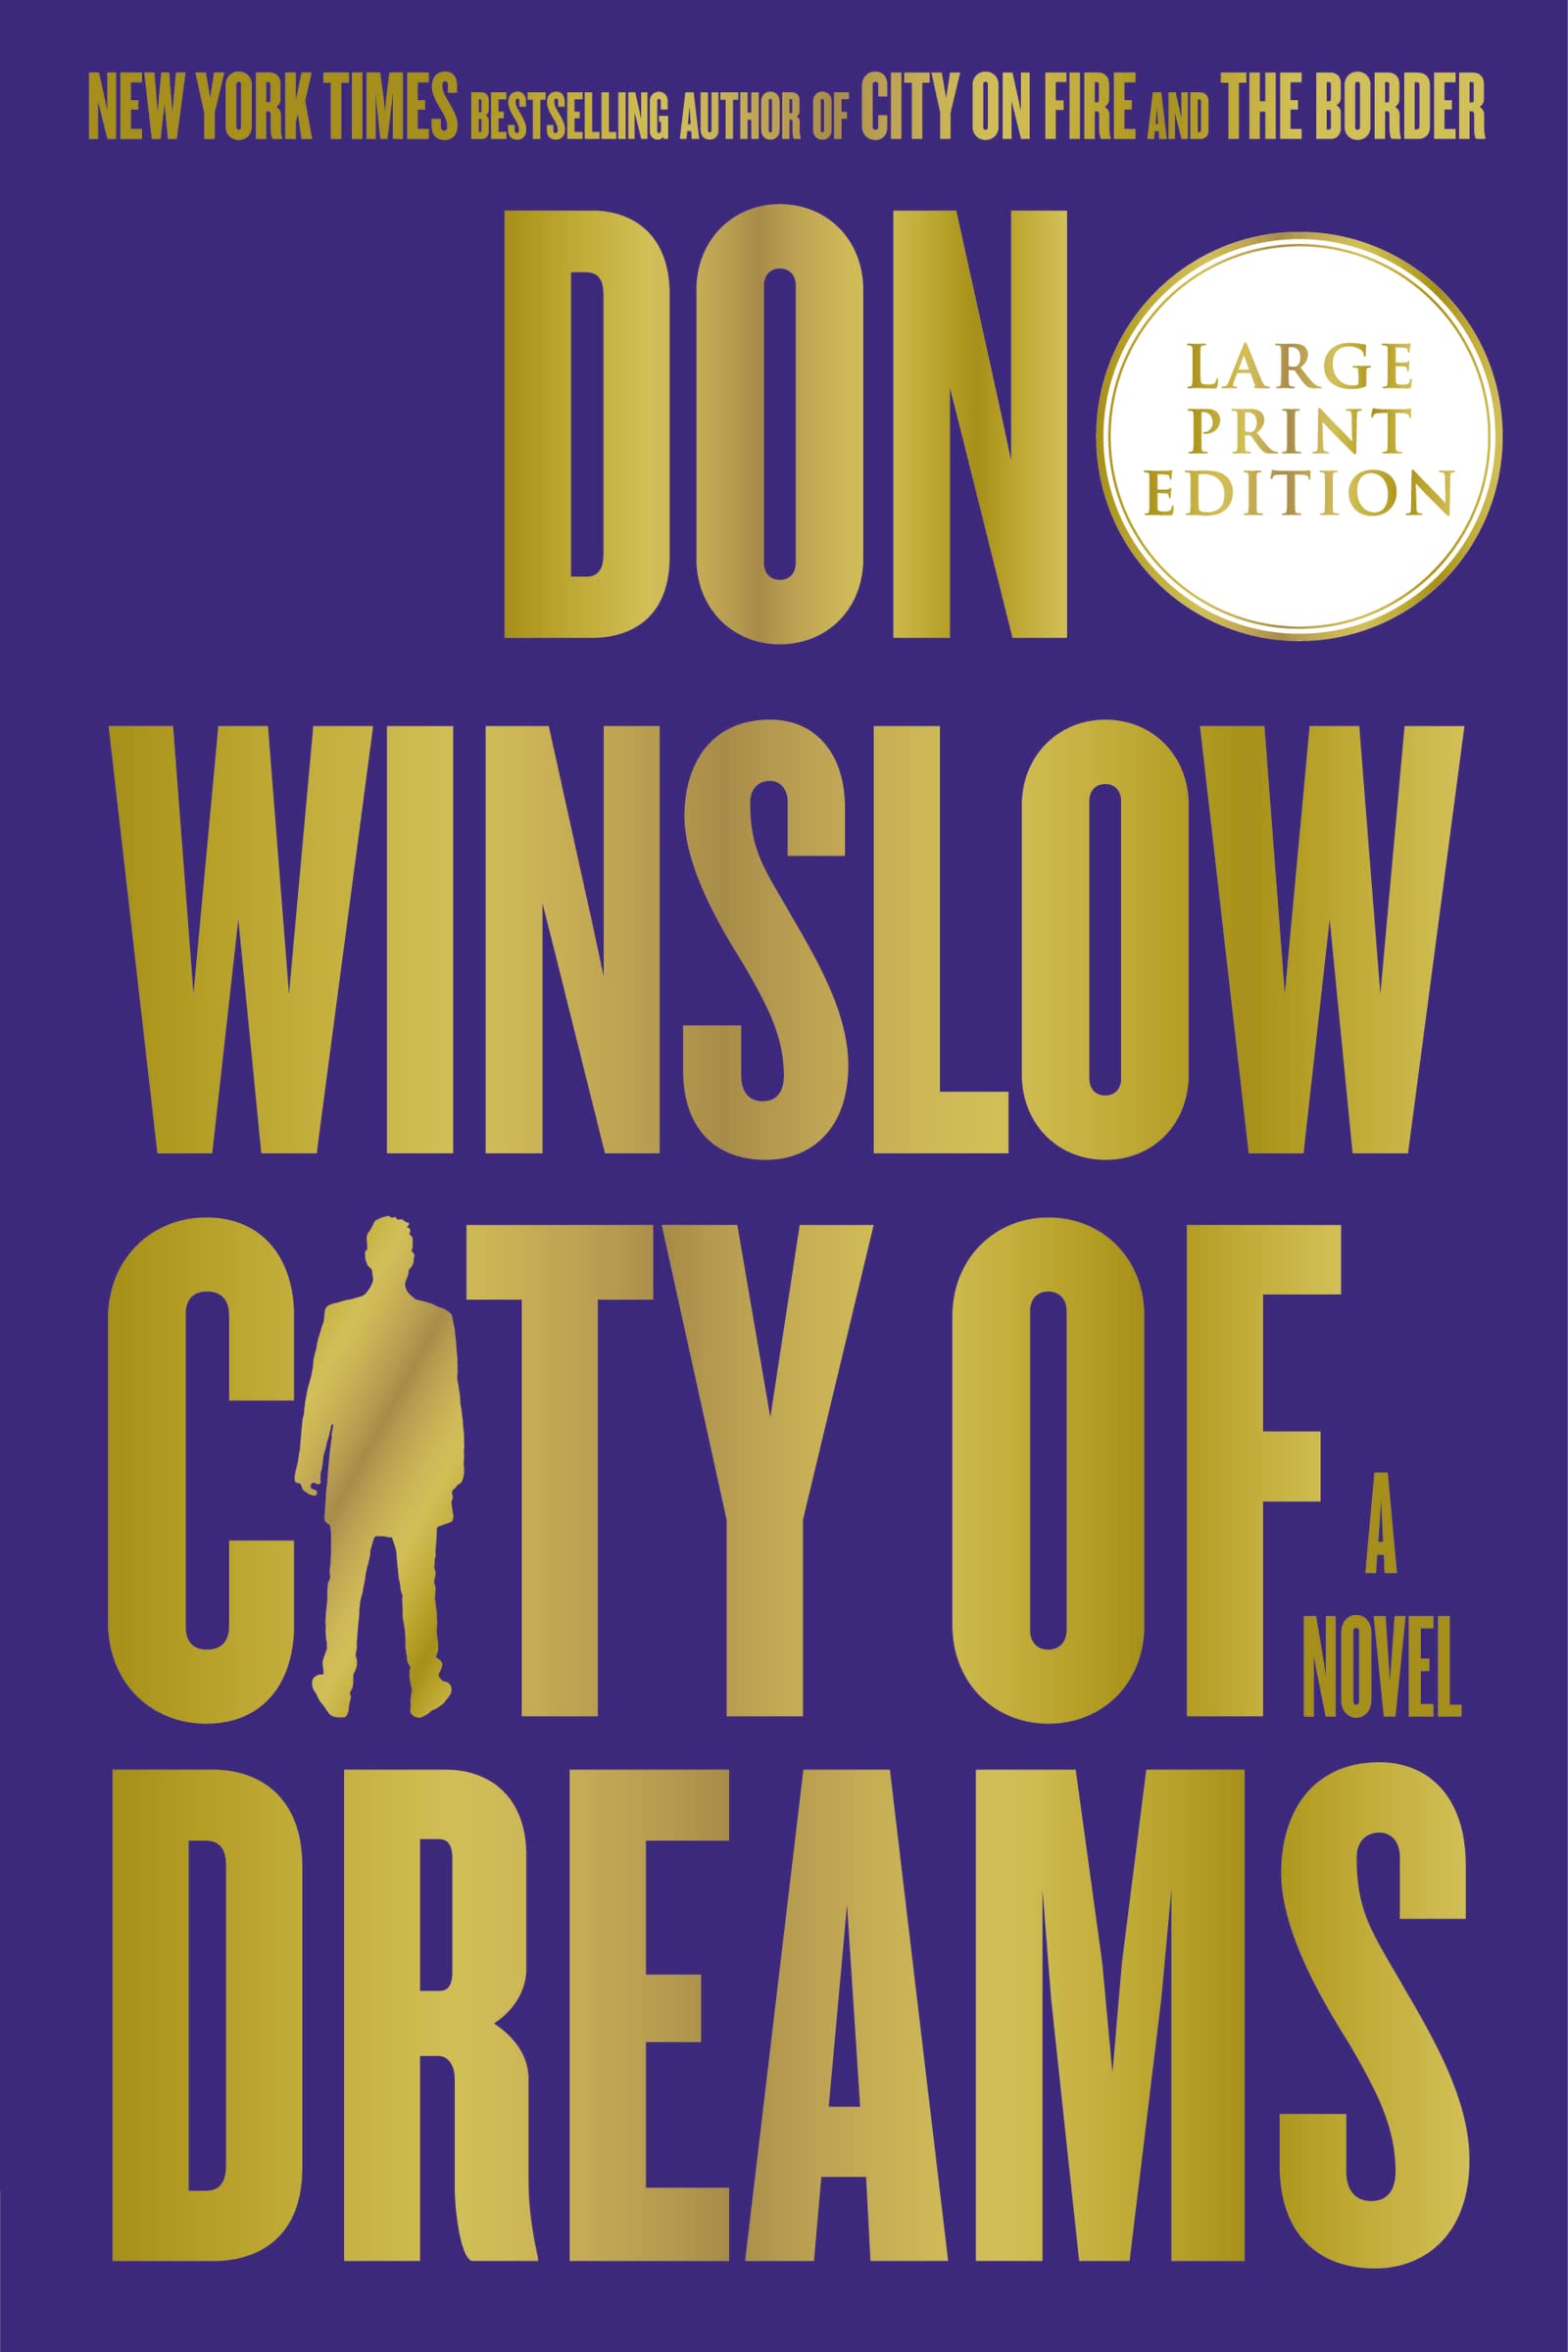 City of Dreams SureShot Books